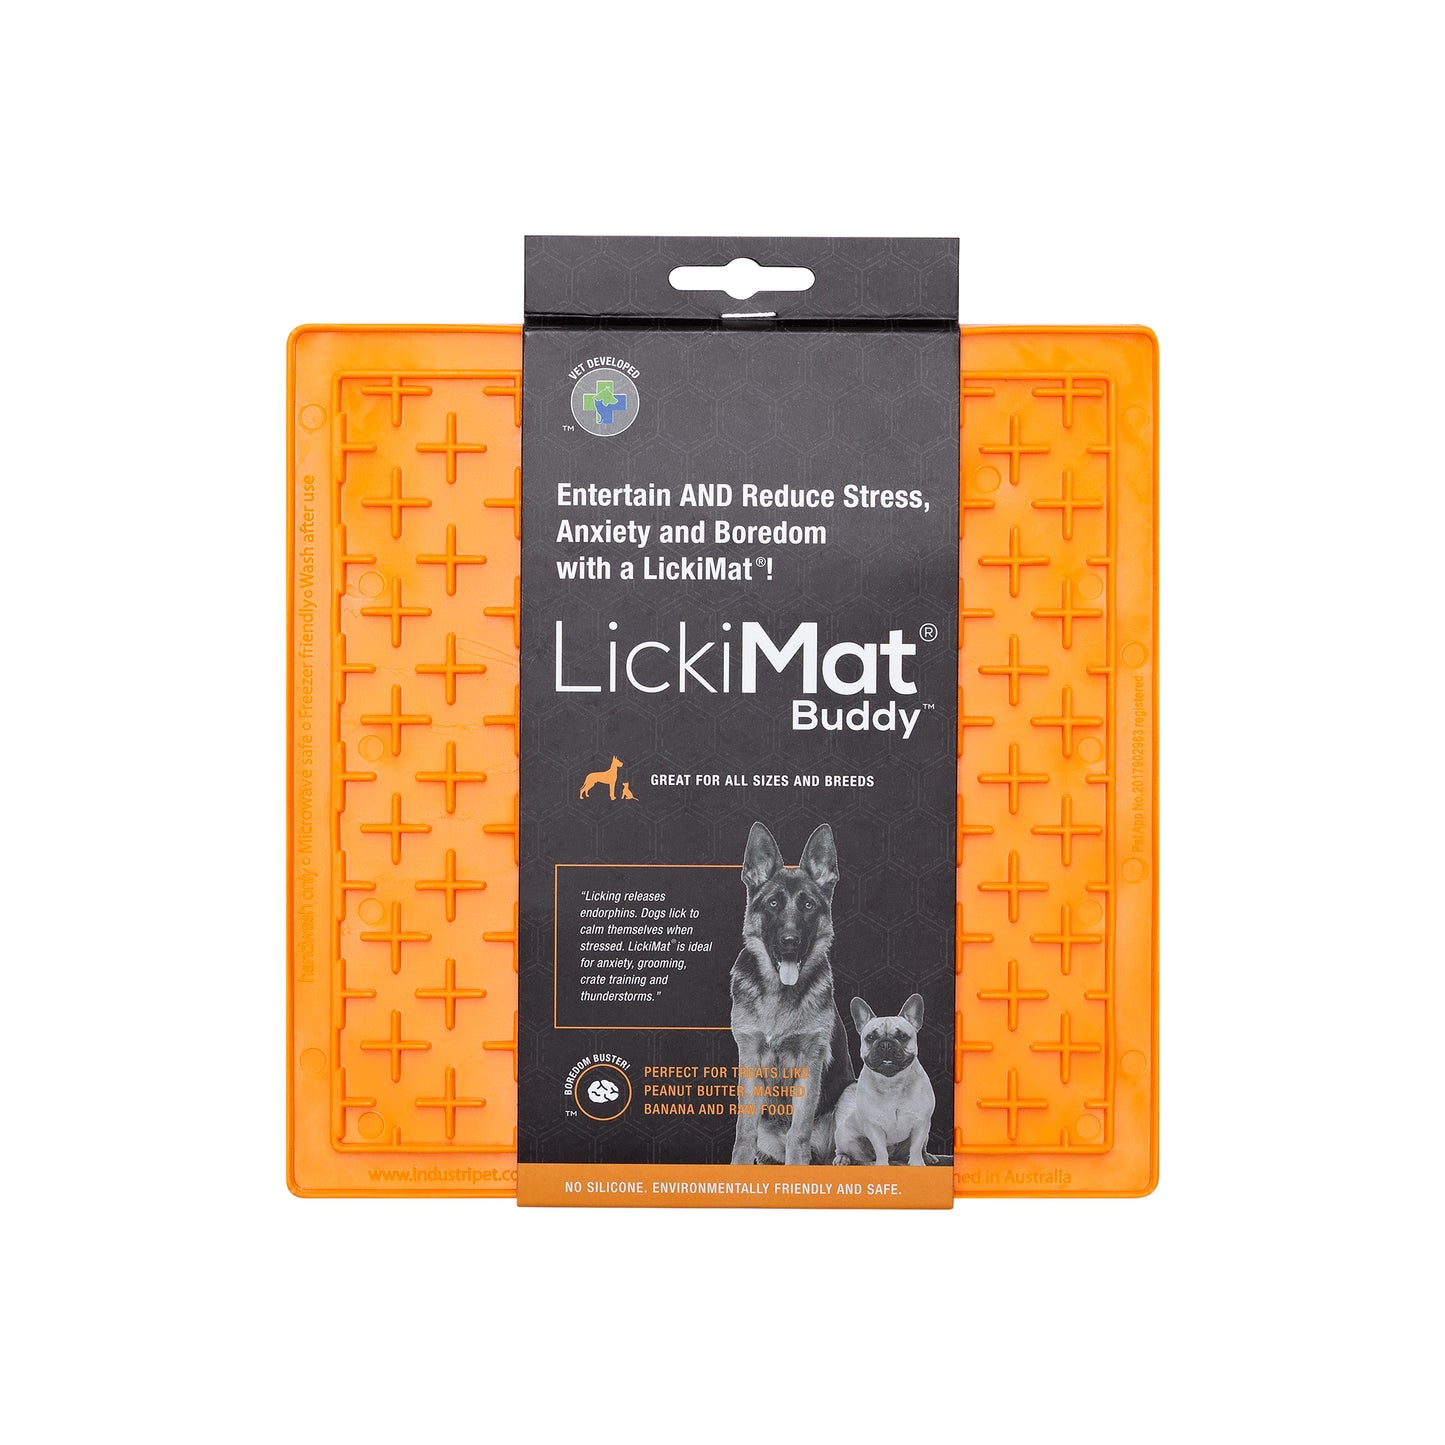 LickiMat Buddy - Keep them busy, happy & healthy